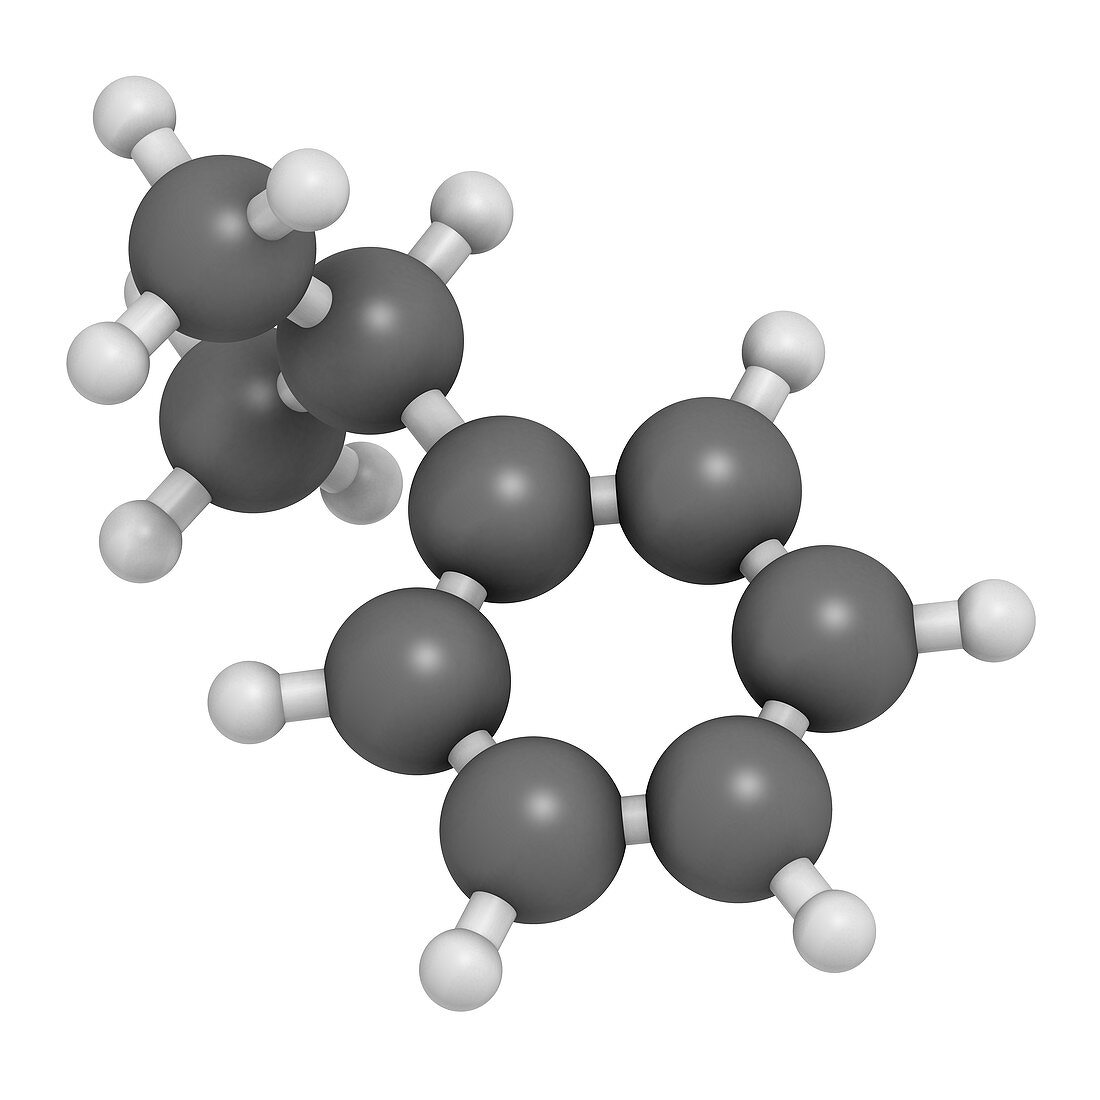 Cumene aromatic hydrocarbon molecule